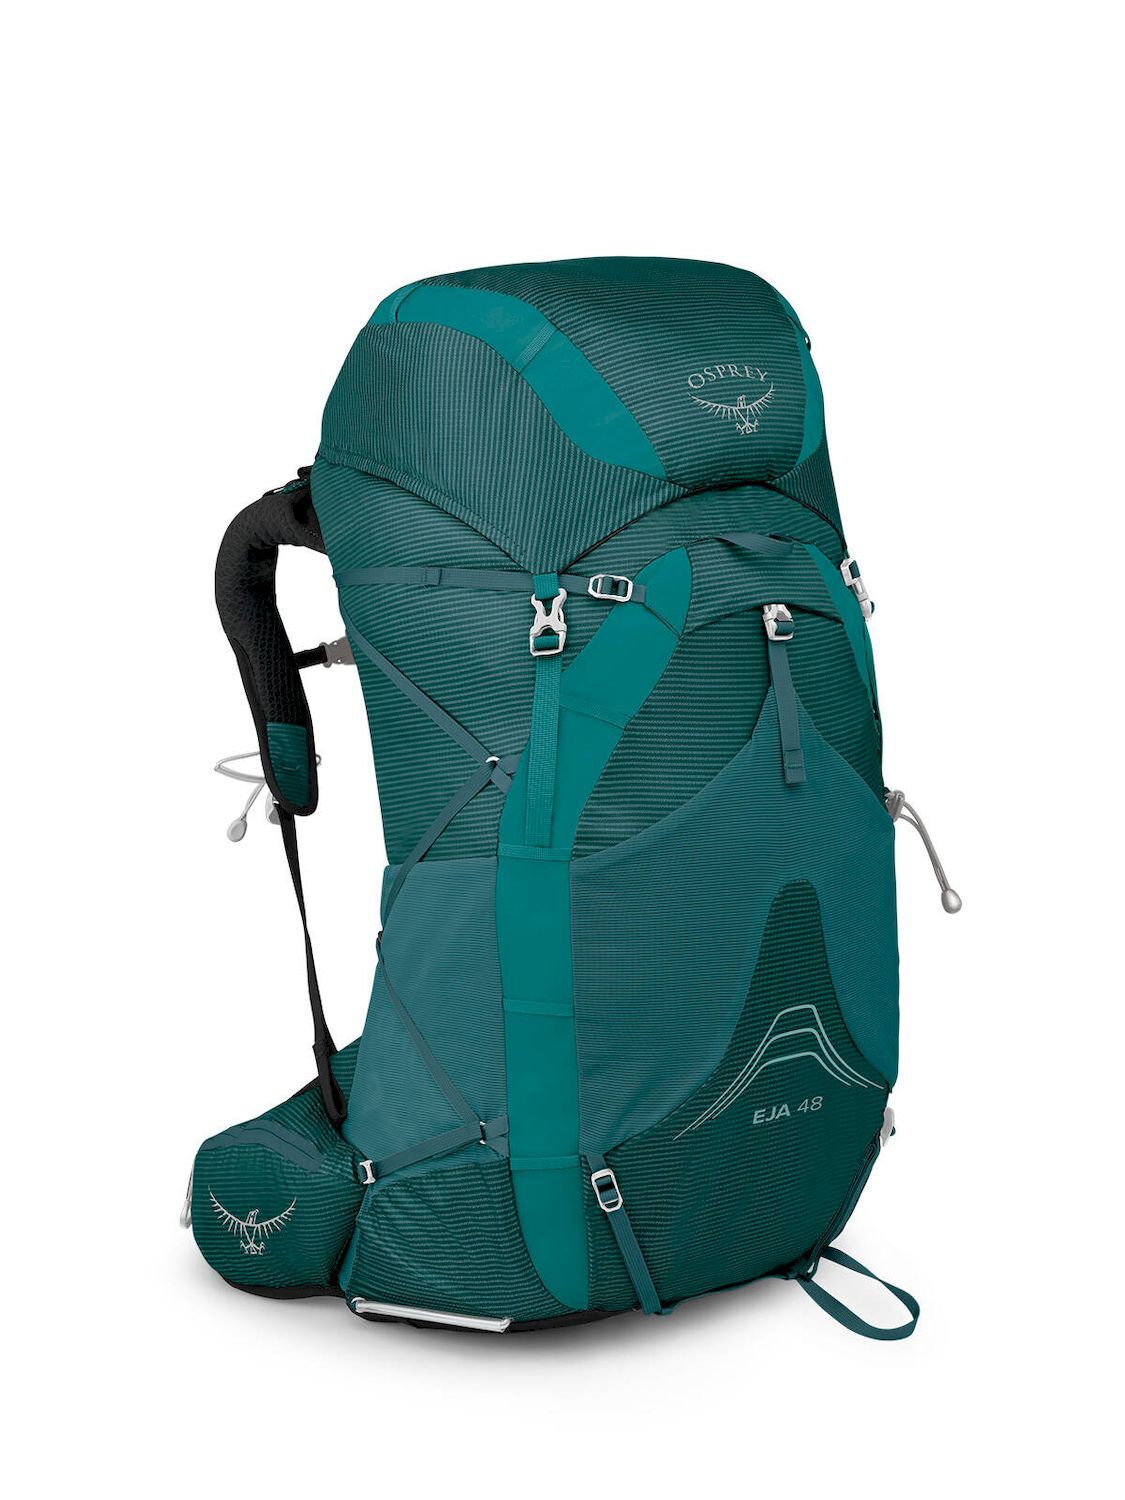 Osprey Eja 48 - Hiking backpack - Women's